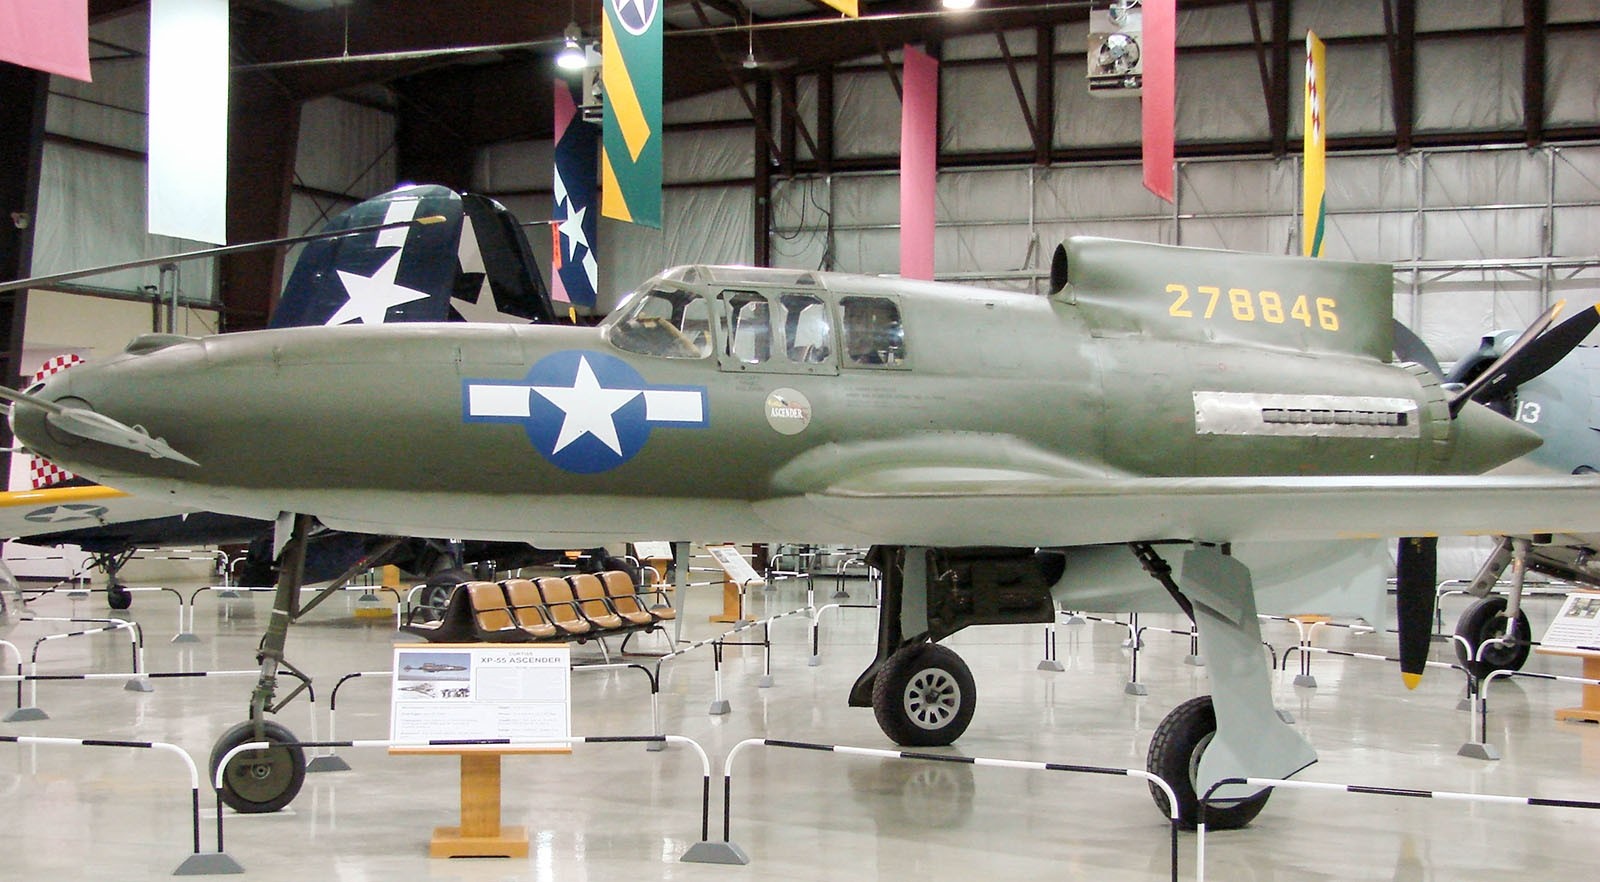 Curtiss-Wright XP-55 Ascender - Photos & Videos